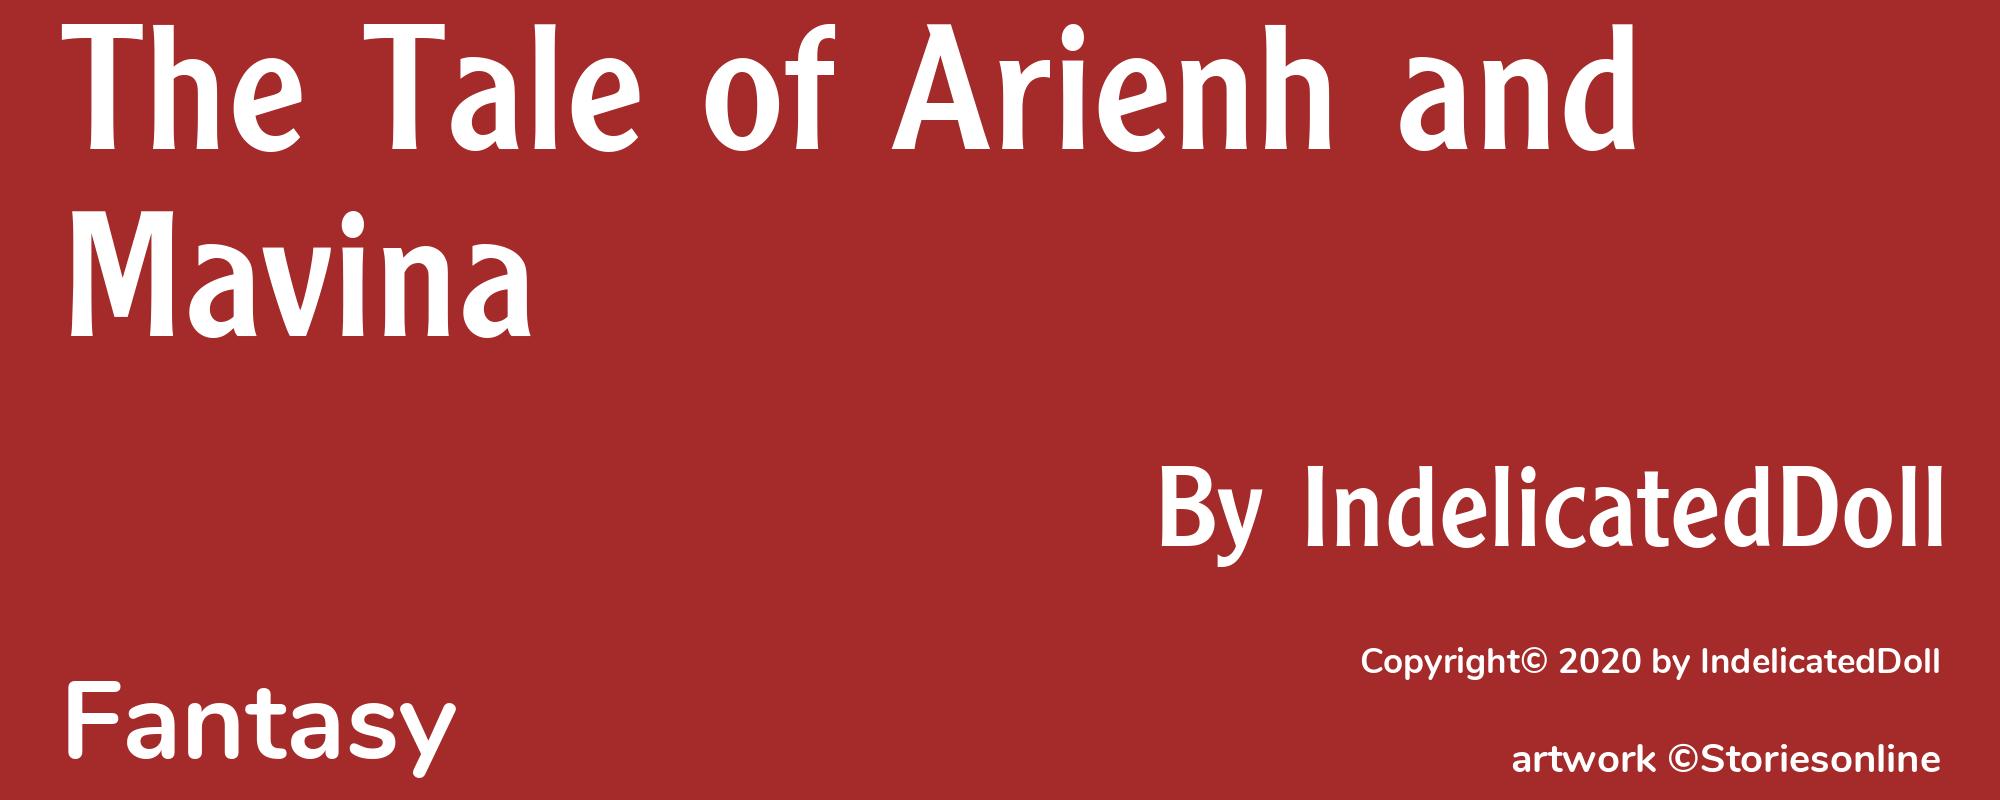 The Tale of Arienh and Mavina - Cover